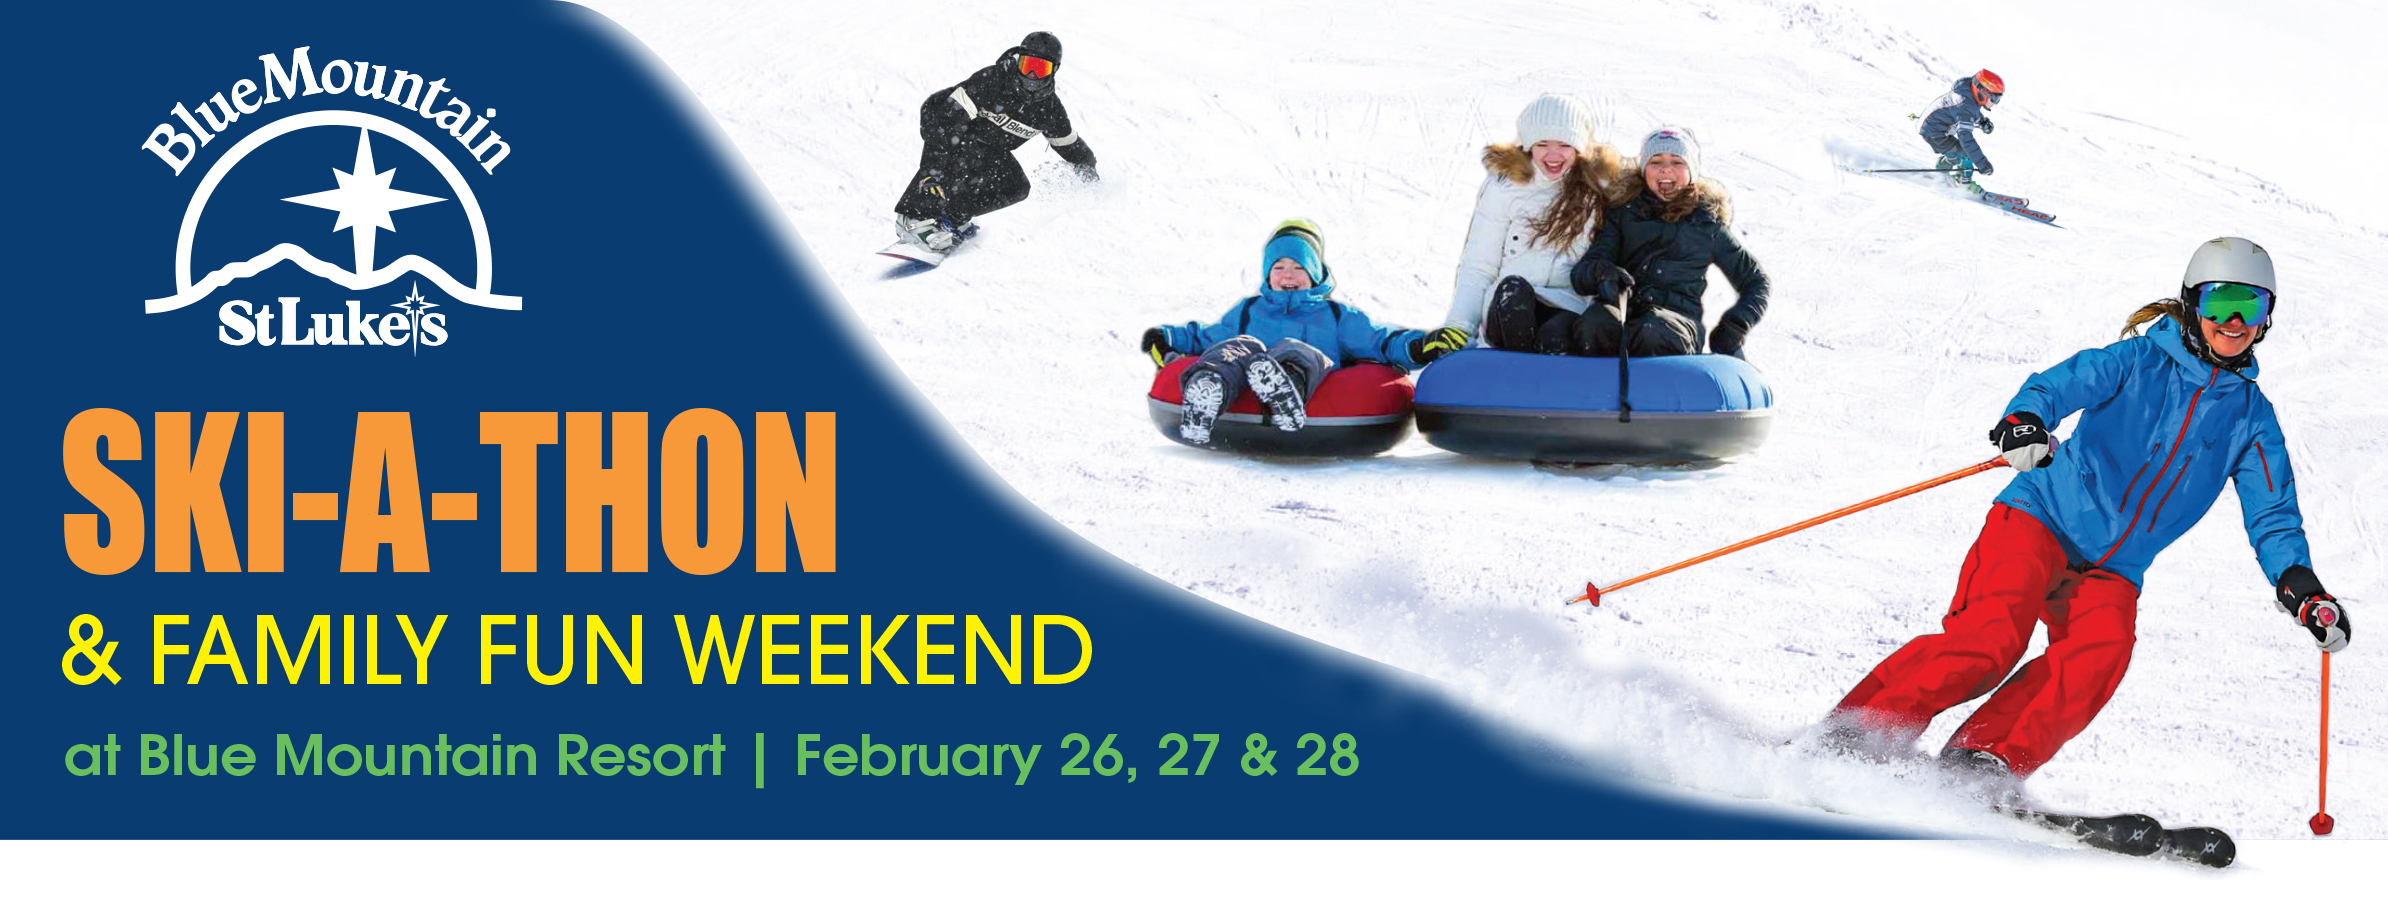 Ski-a-thon and Family Fun Weekend